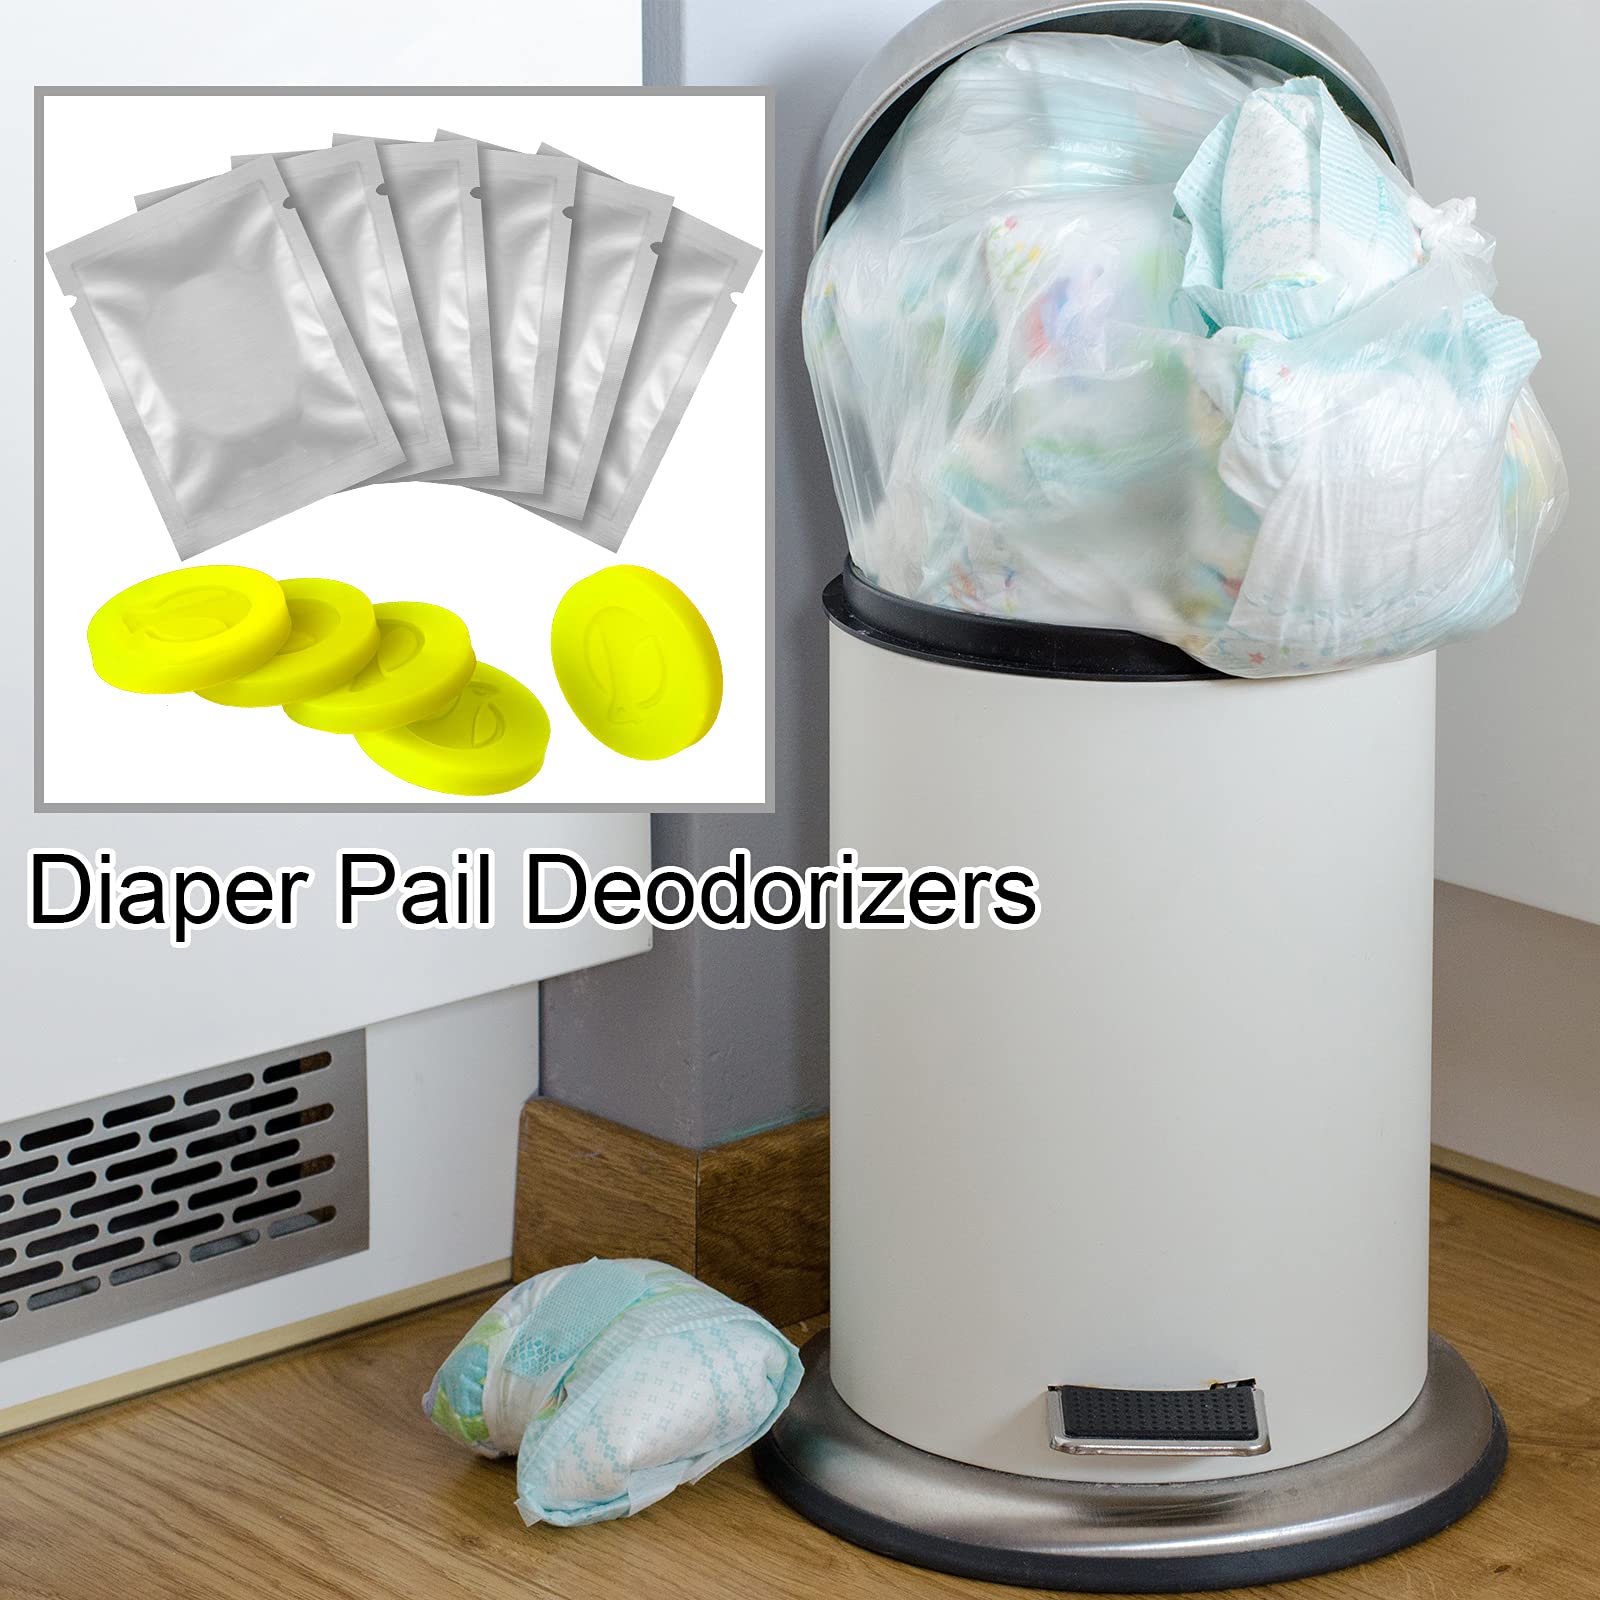 12 Pieces Diaper Pail Deodorizers Baby Diaper Deodorizing Disc Diaper Bucket Air Freshener Keep Diaper Pails Smelling Fresh, Yellow